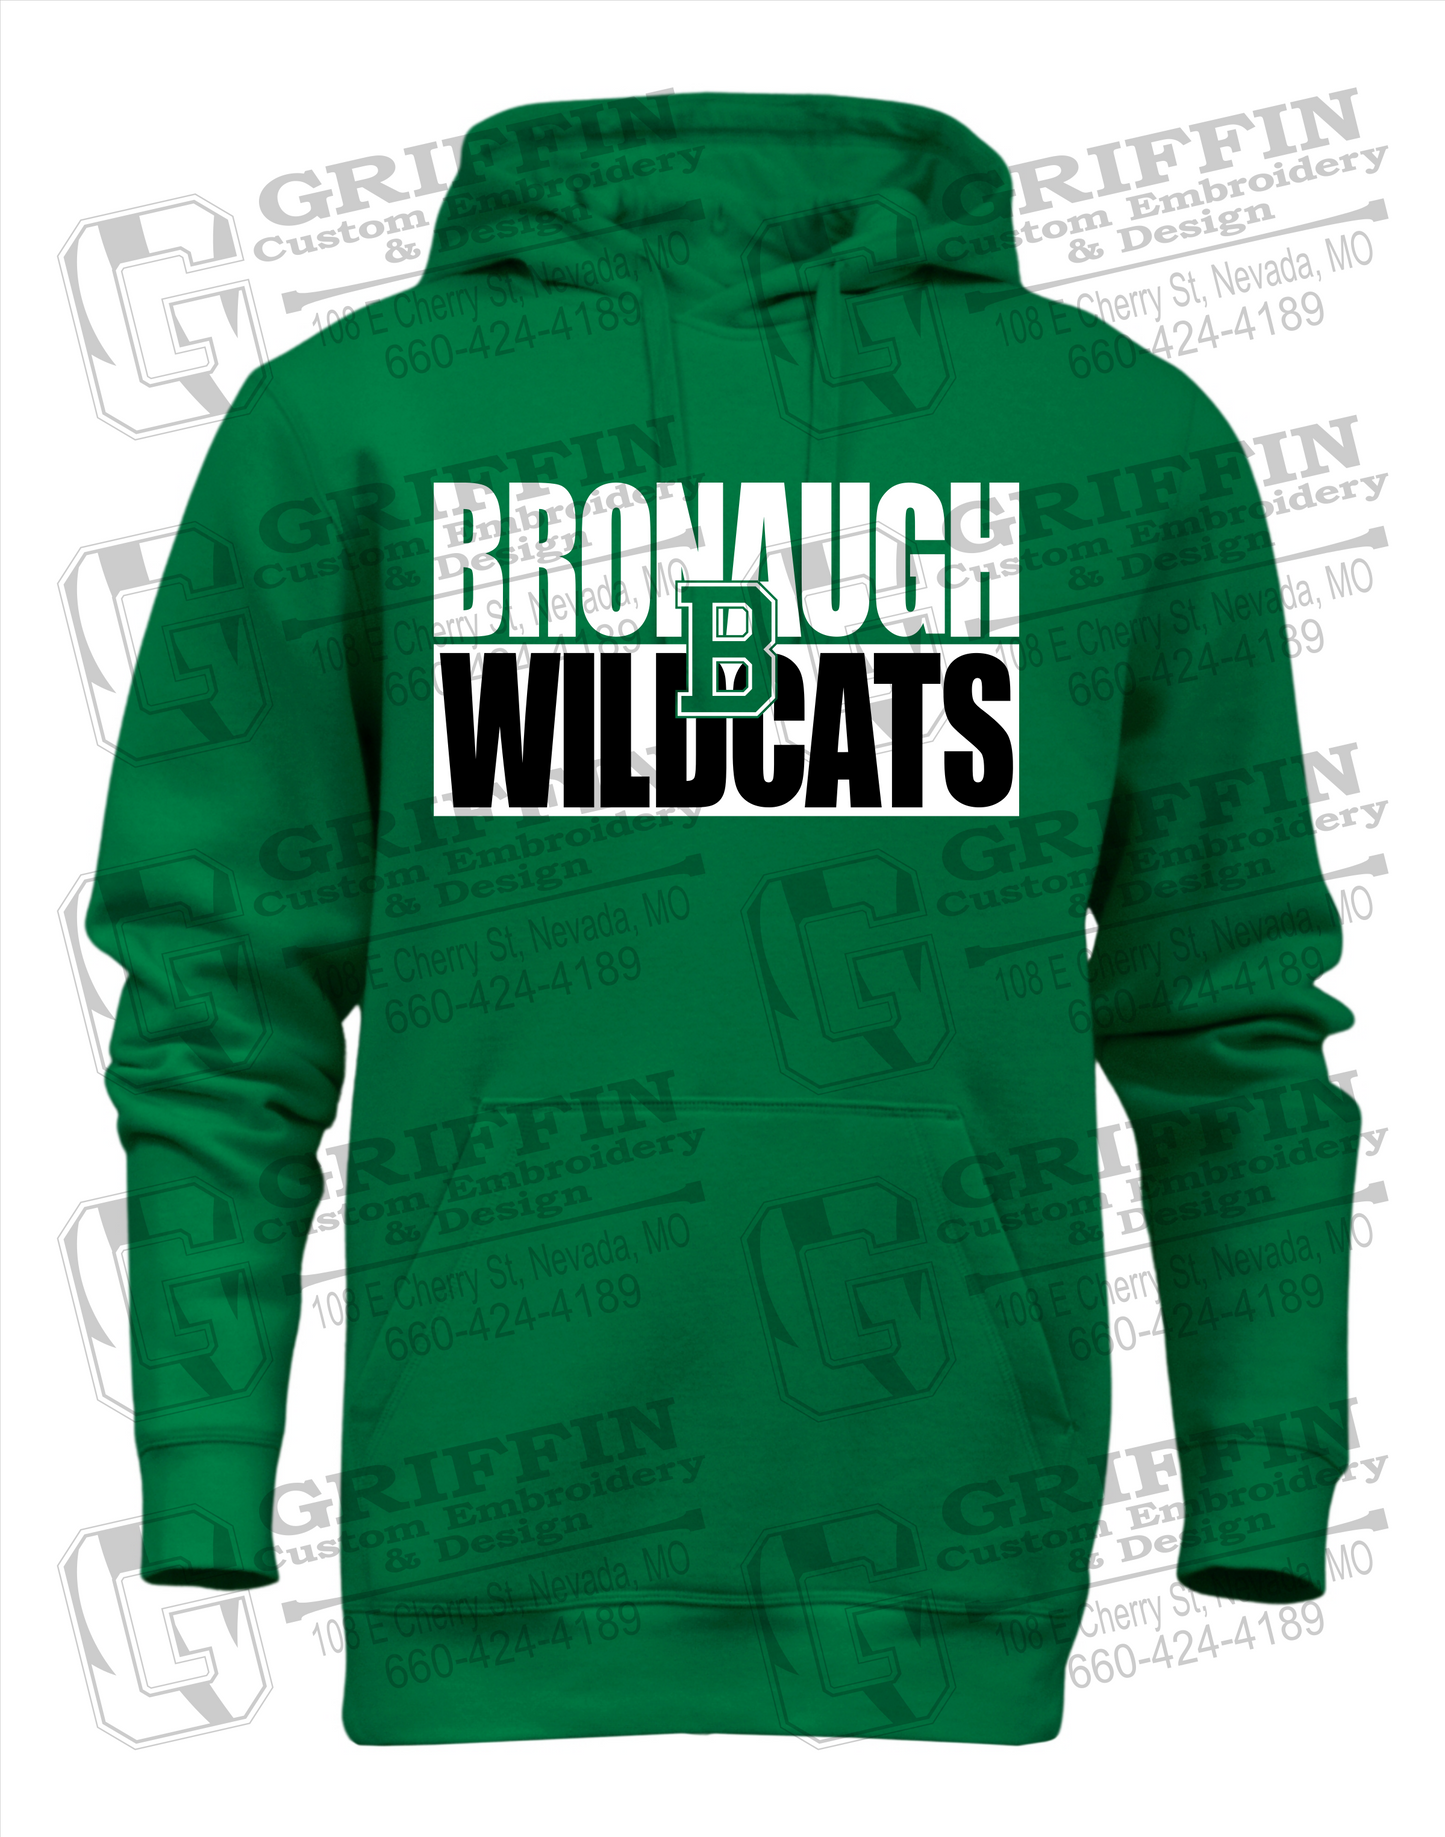 Bronaugh Wildcats 24-C Heavyweight Hoodie